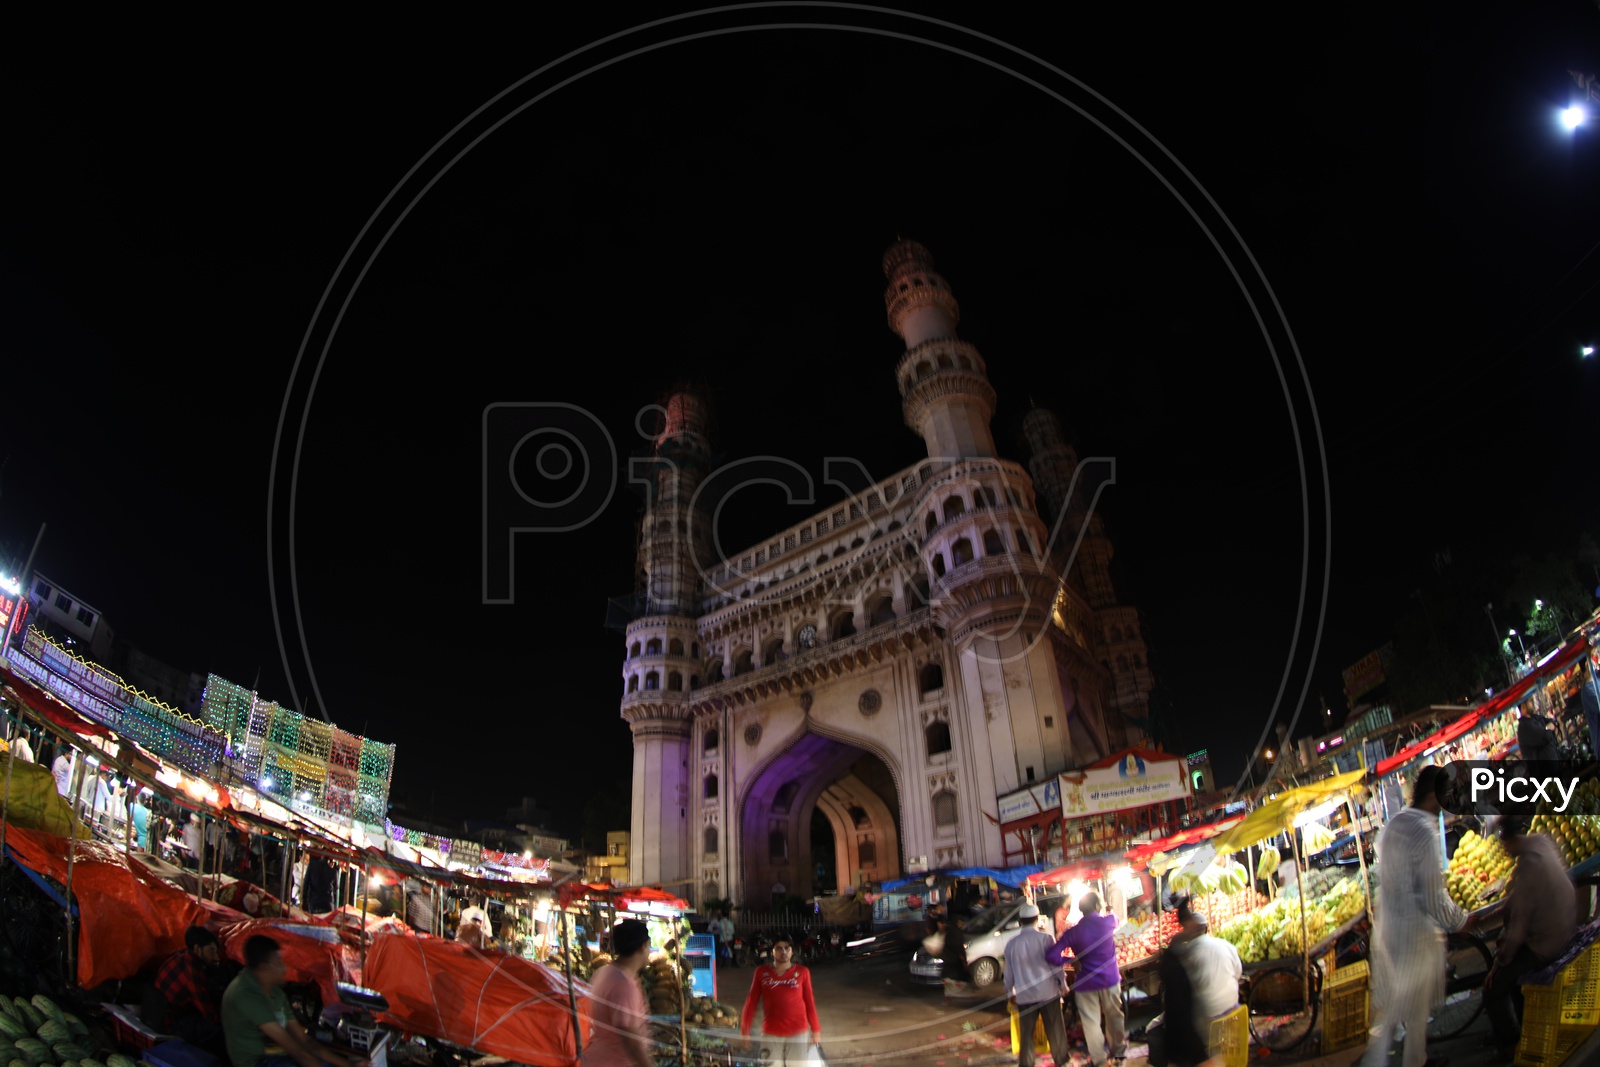 Busy Charminar Streets With Vendor Stalls During Ramzan Ramdan Season